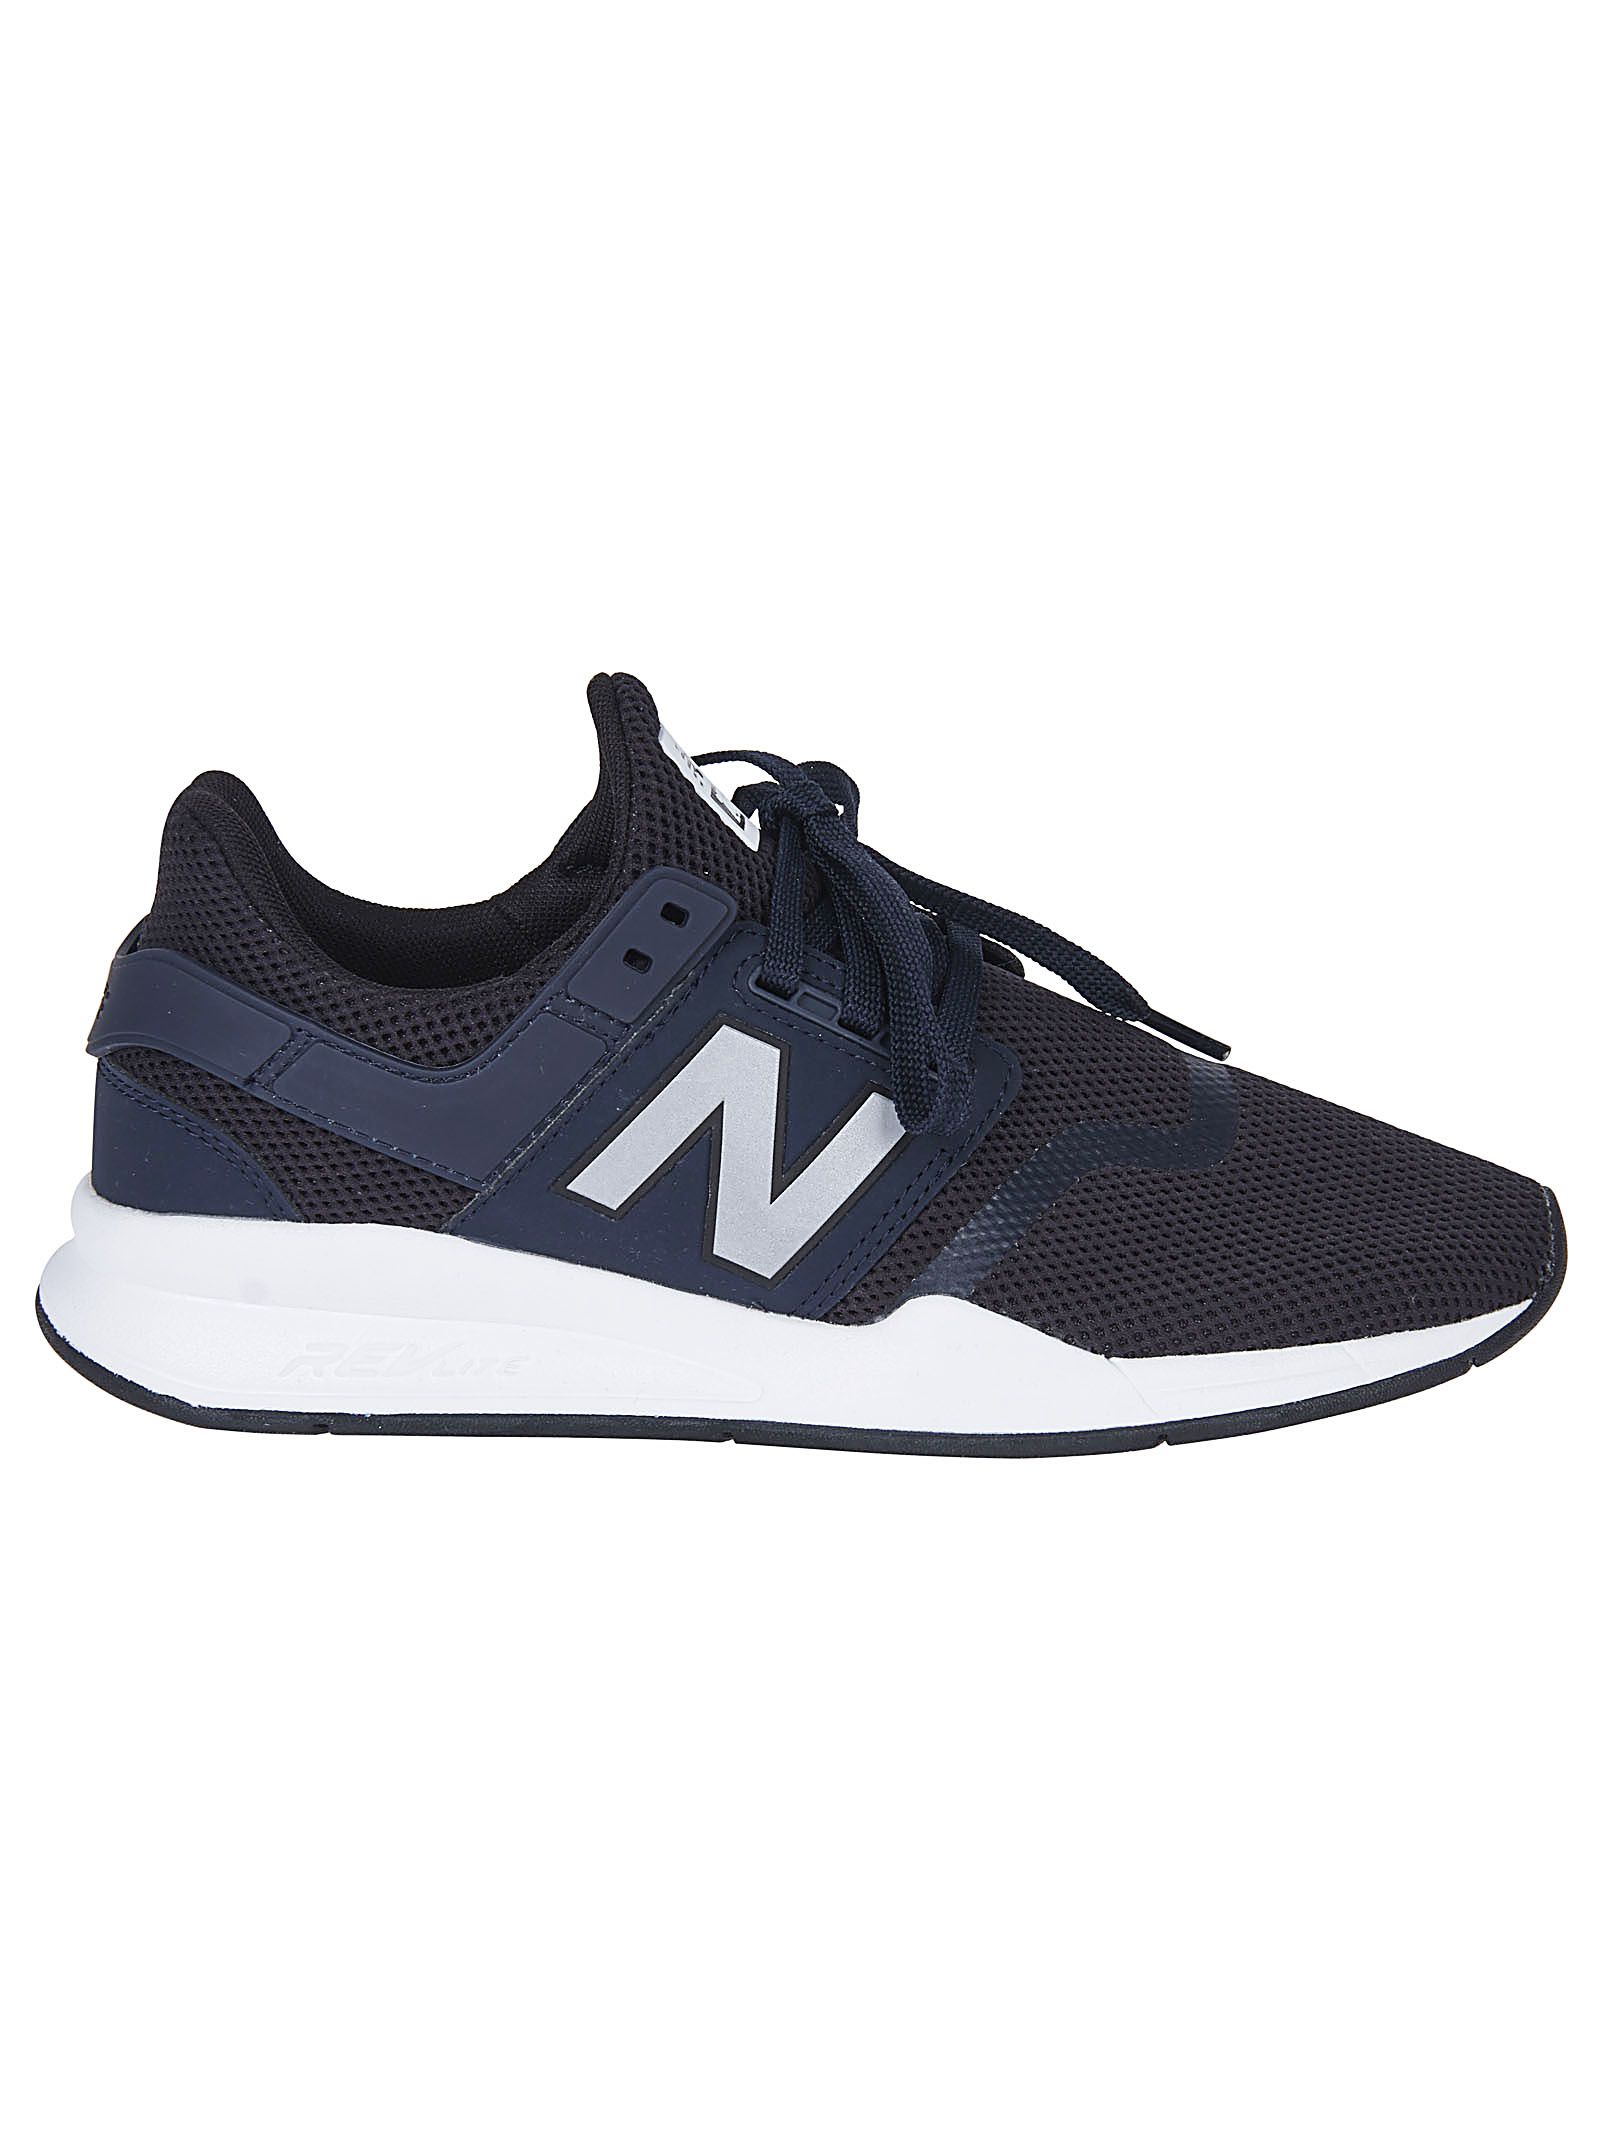 New Balance New Balance Ms247 Sneakers - Navy - 10904613 | italist